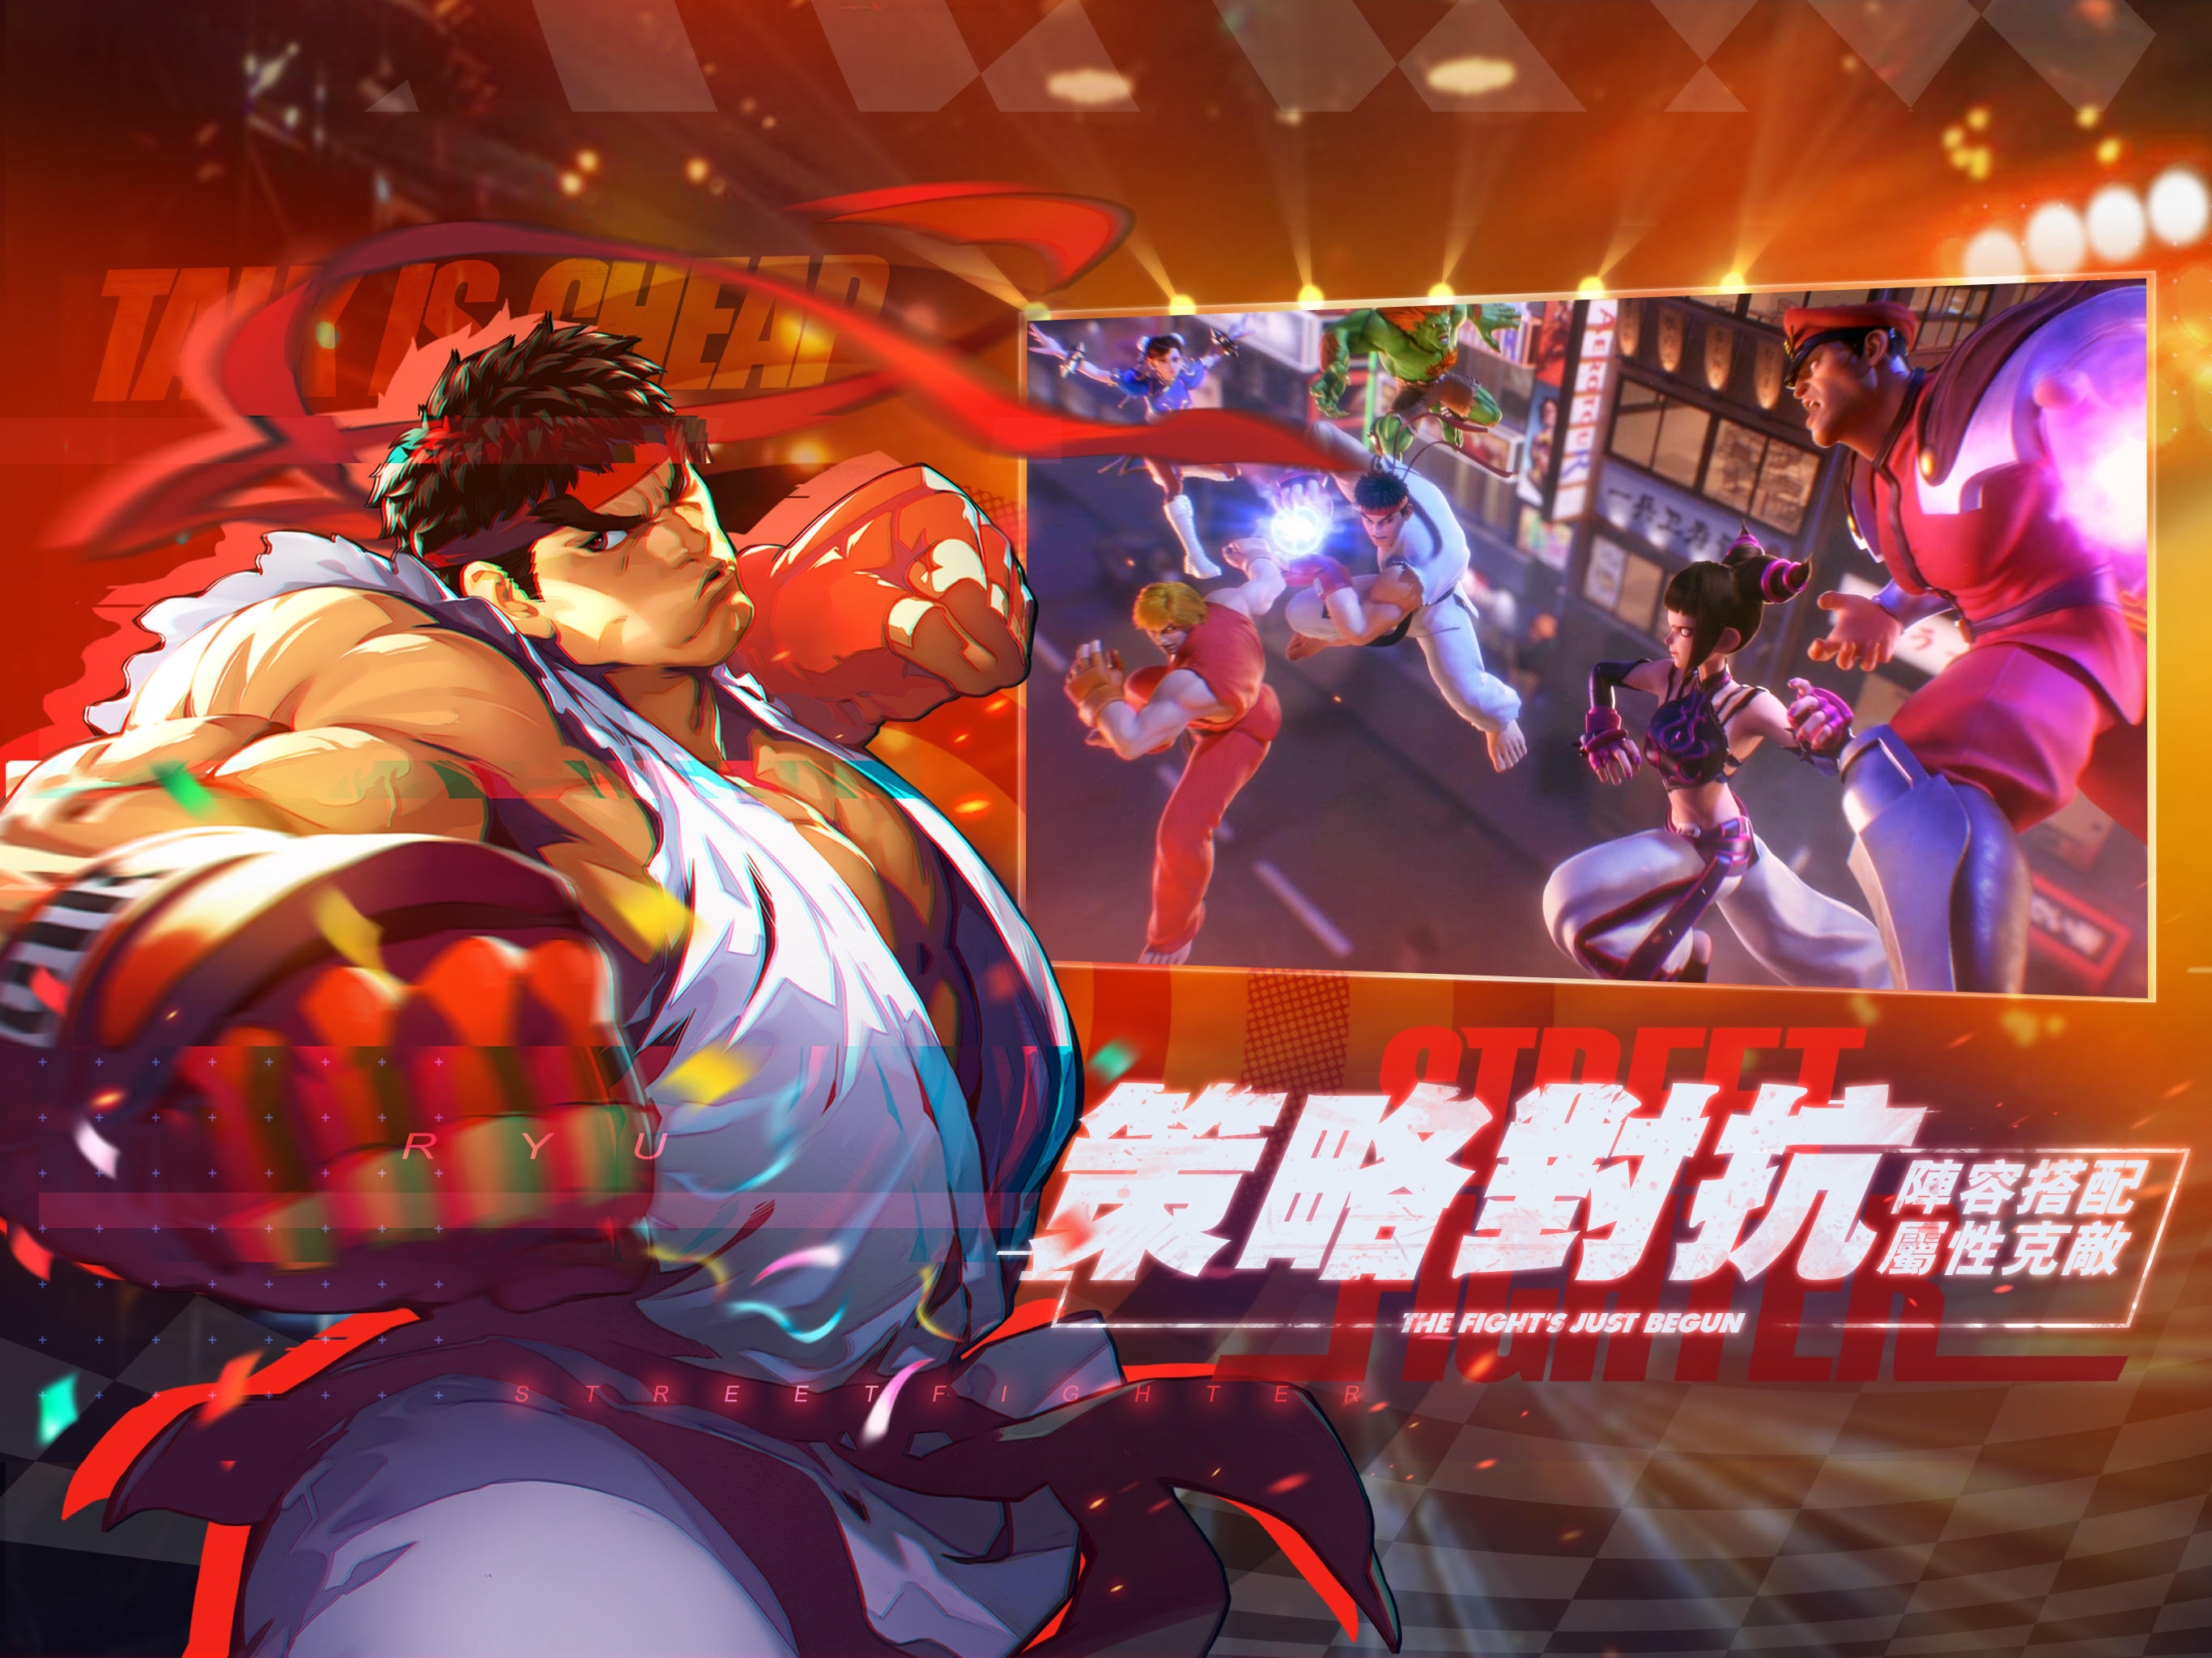 street fighter duel mobile game rewards - Anime Trending